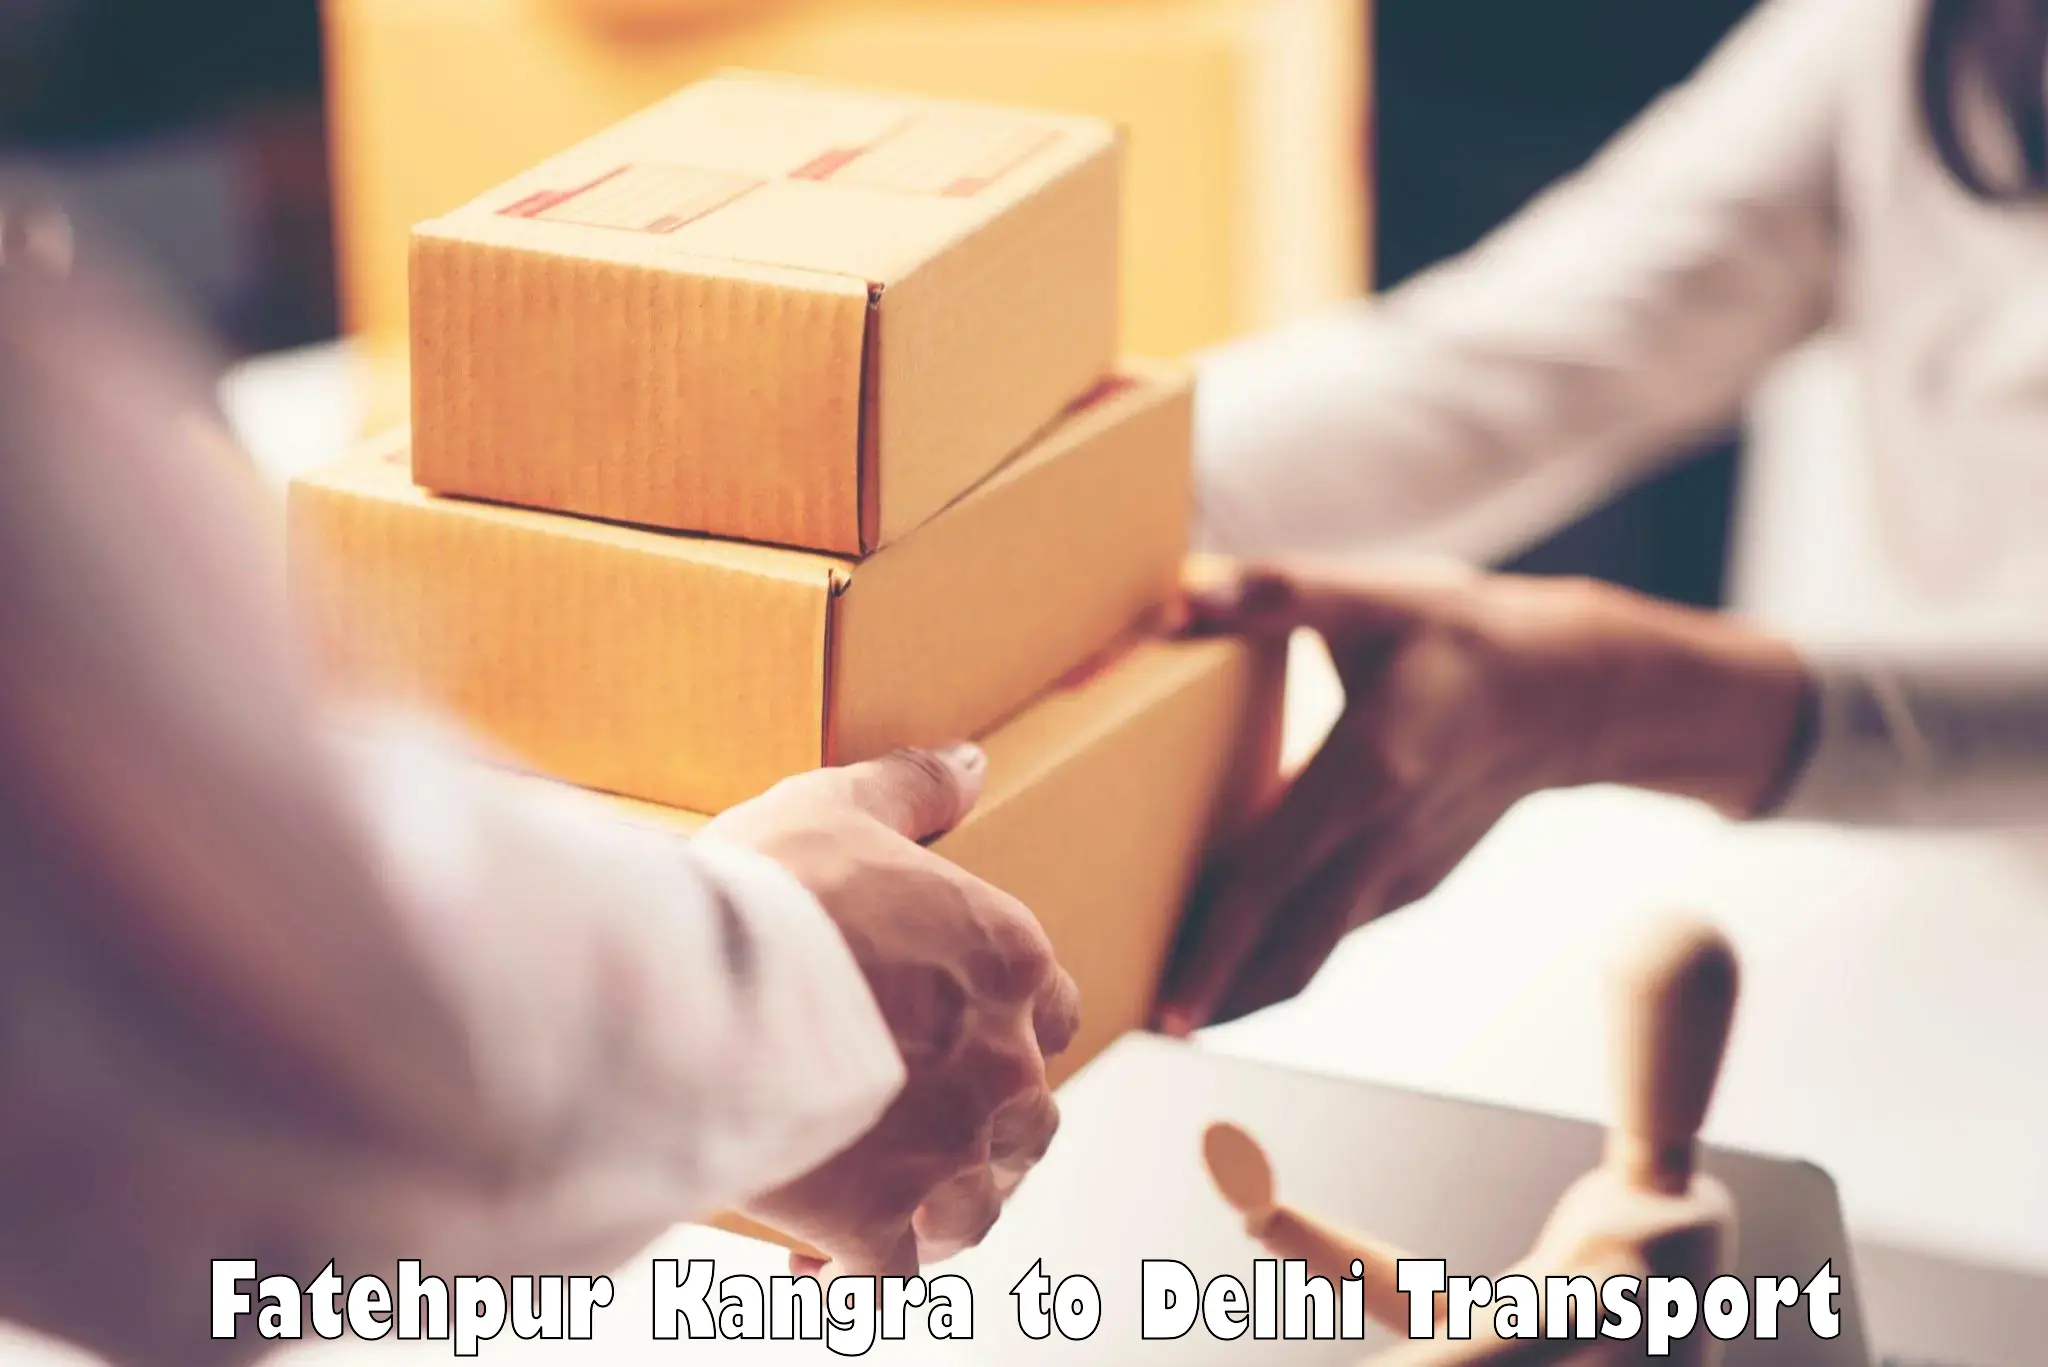 Transport in sharing Fatehpur Kangra to Delhi